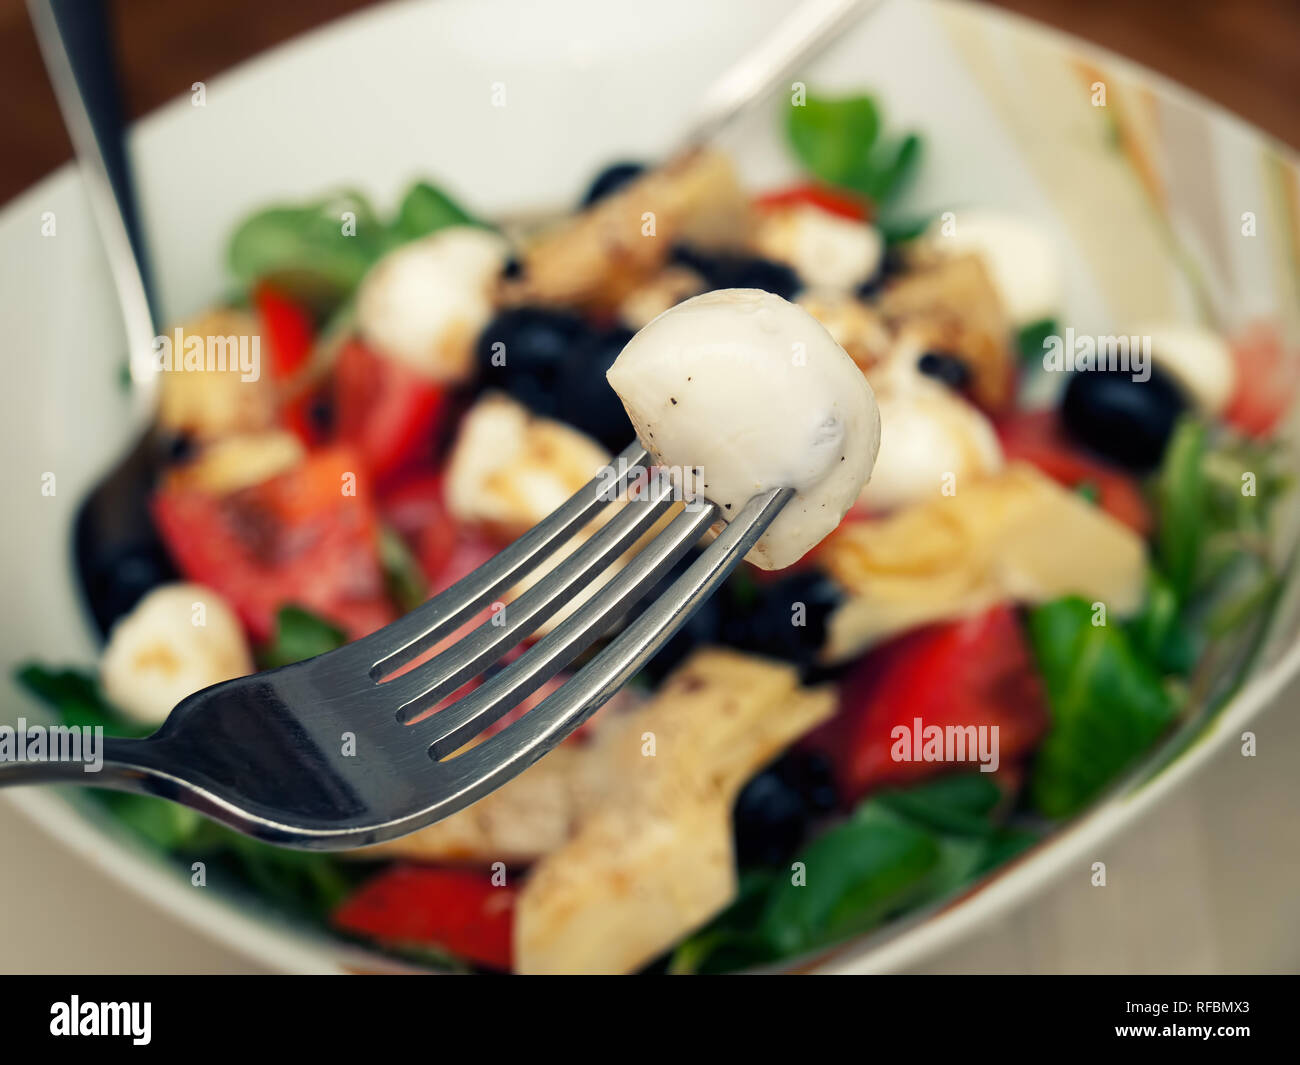 Closeup view of a bowl full of Mozzarella salad. Stock Photo